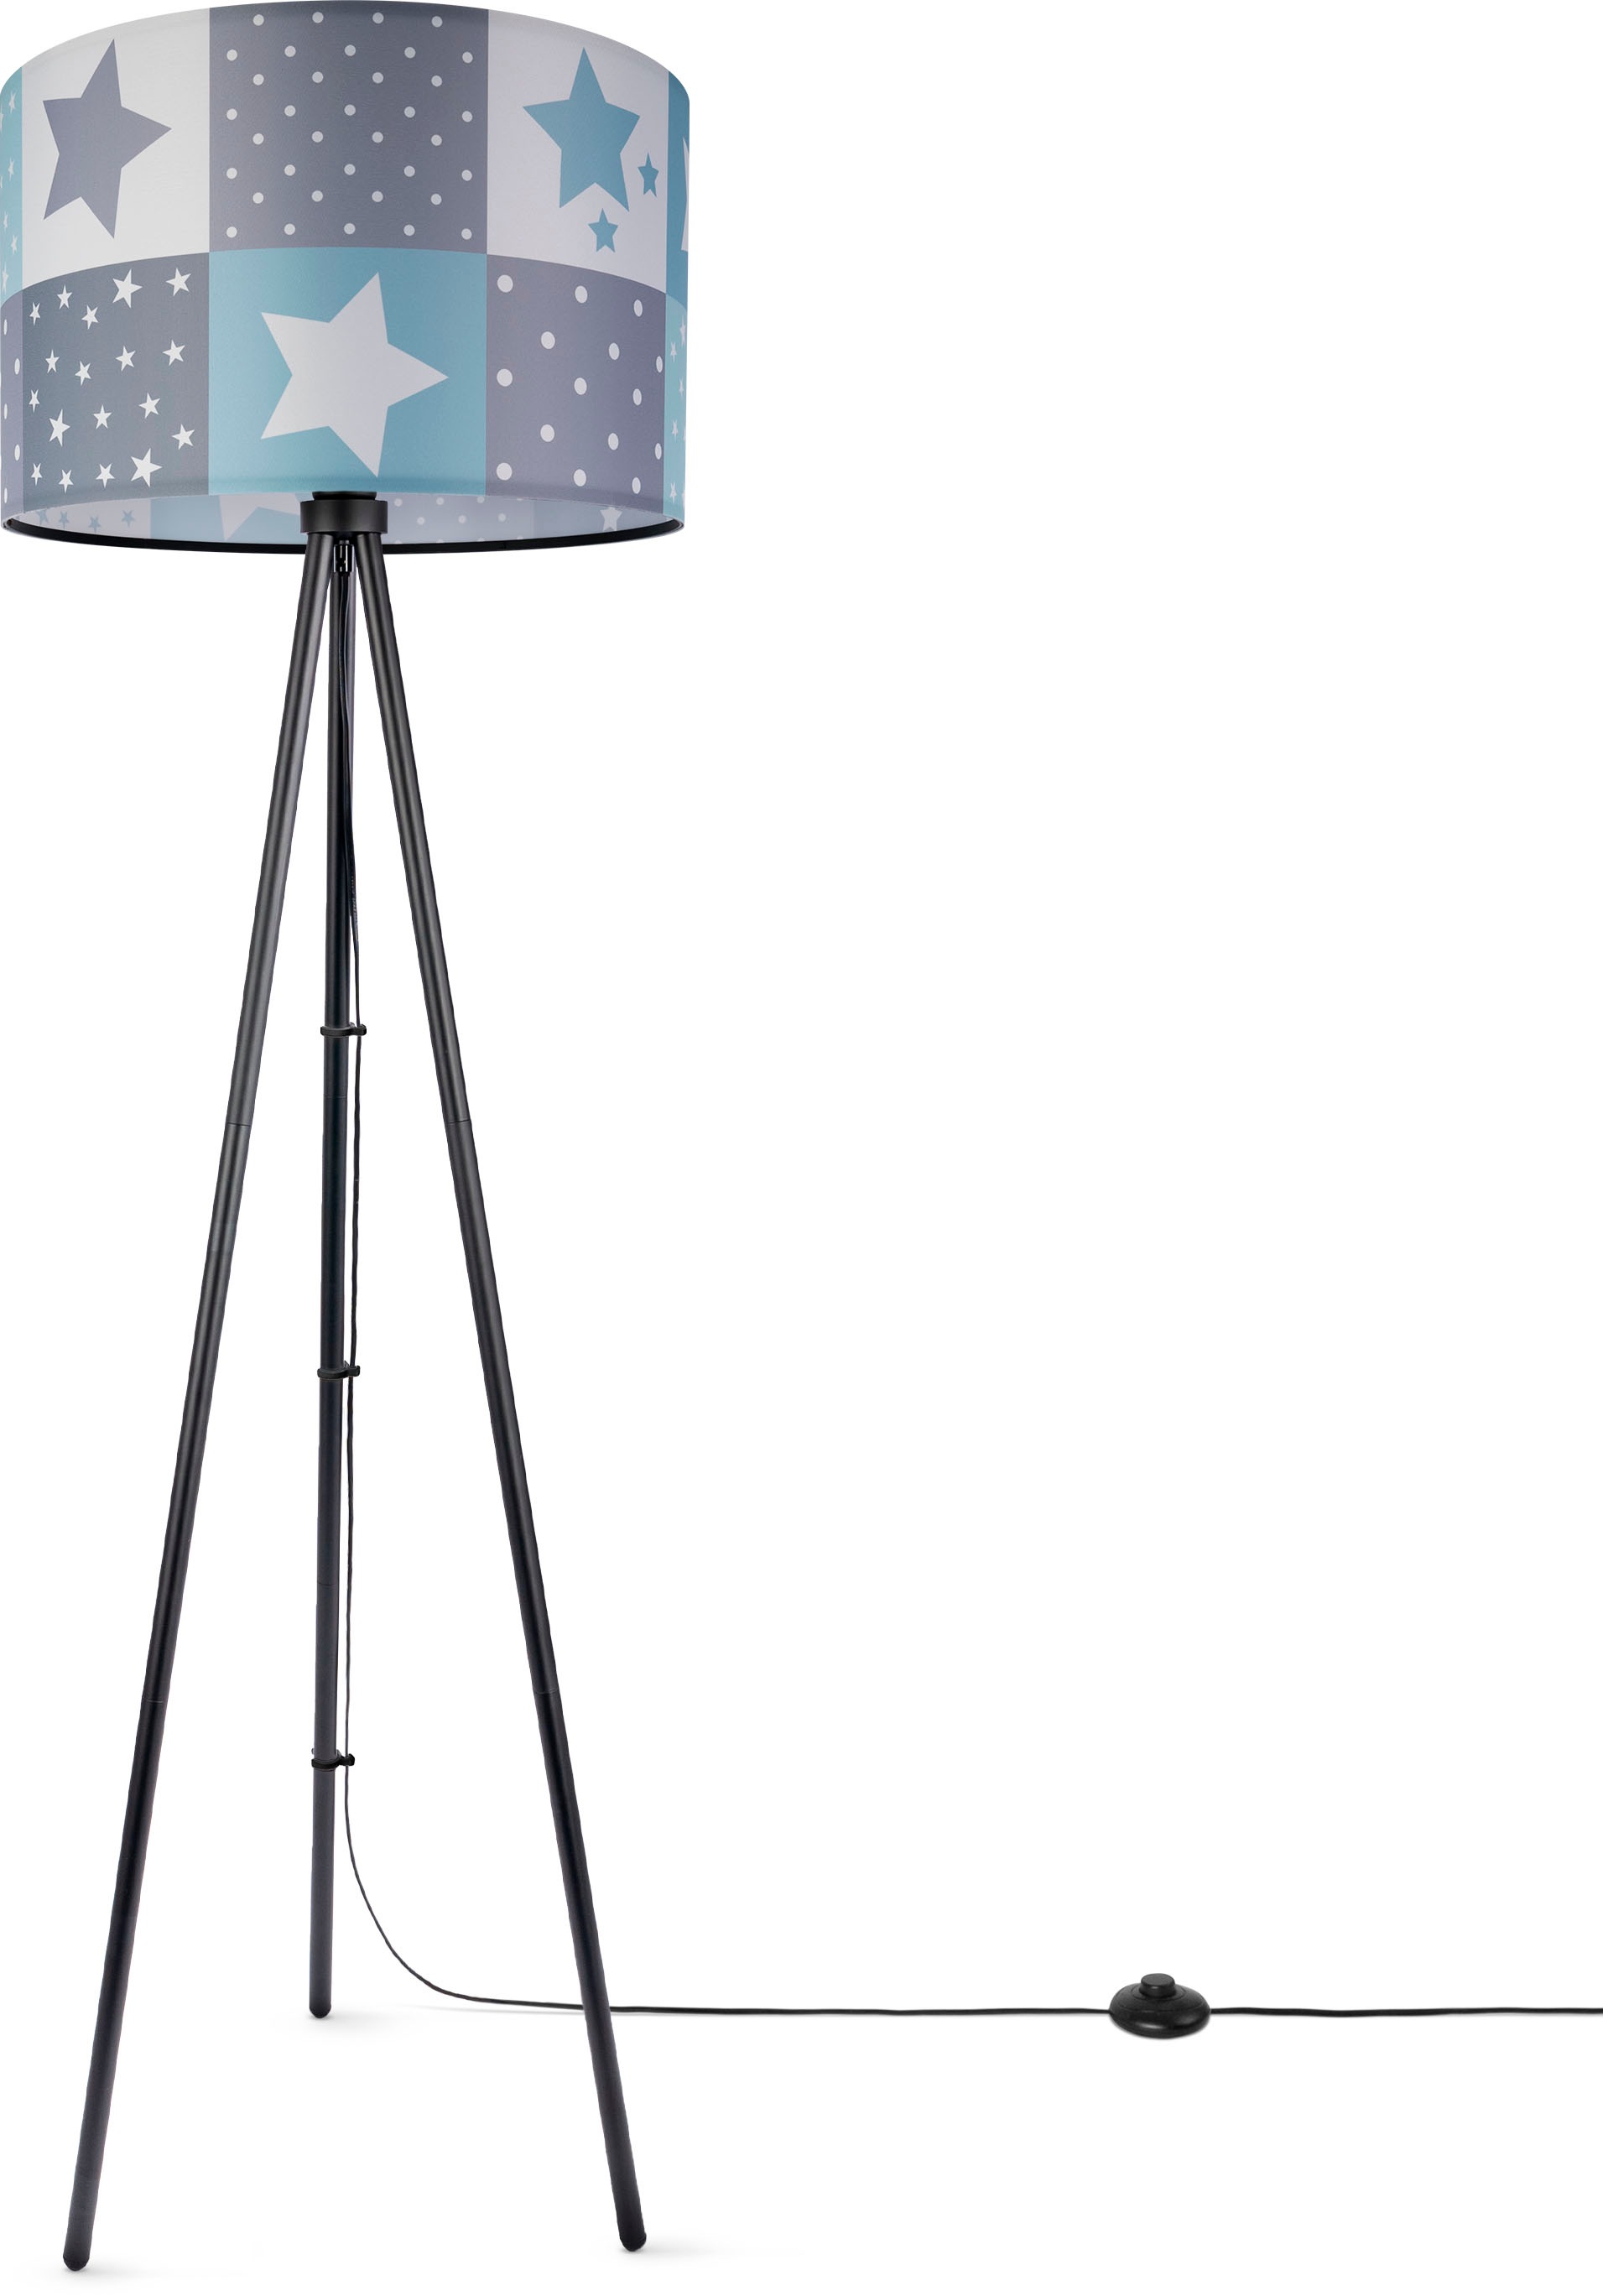 Paco Home Lampe Stehlampe bei Kinderlampe Motiv, Kinderzimmer OTTO Cosmo«, E27 Sternen »Trina Stehleuchte LED